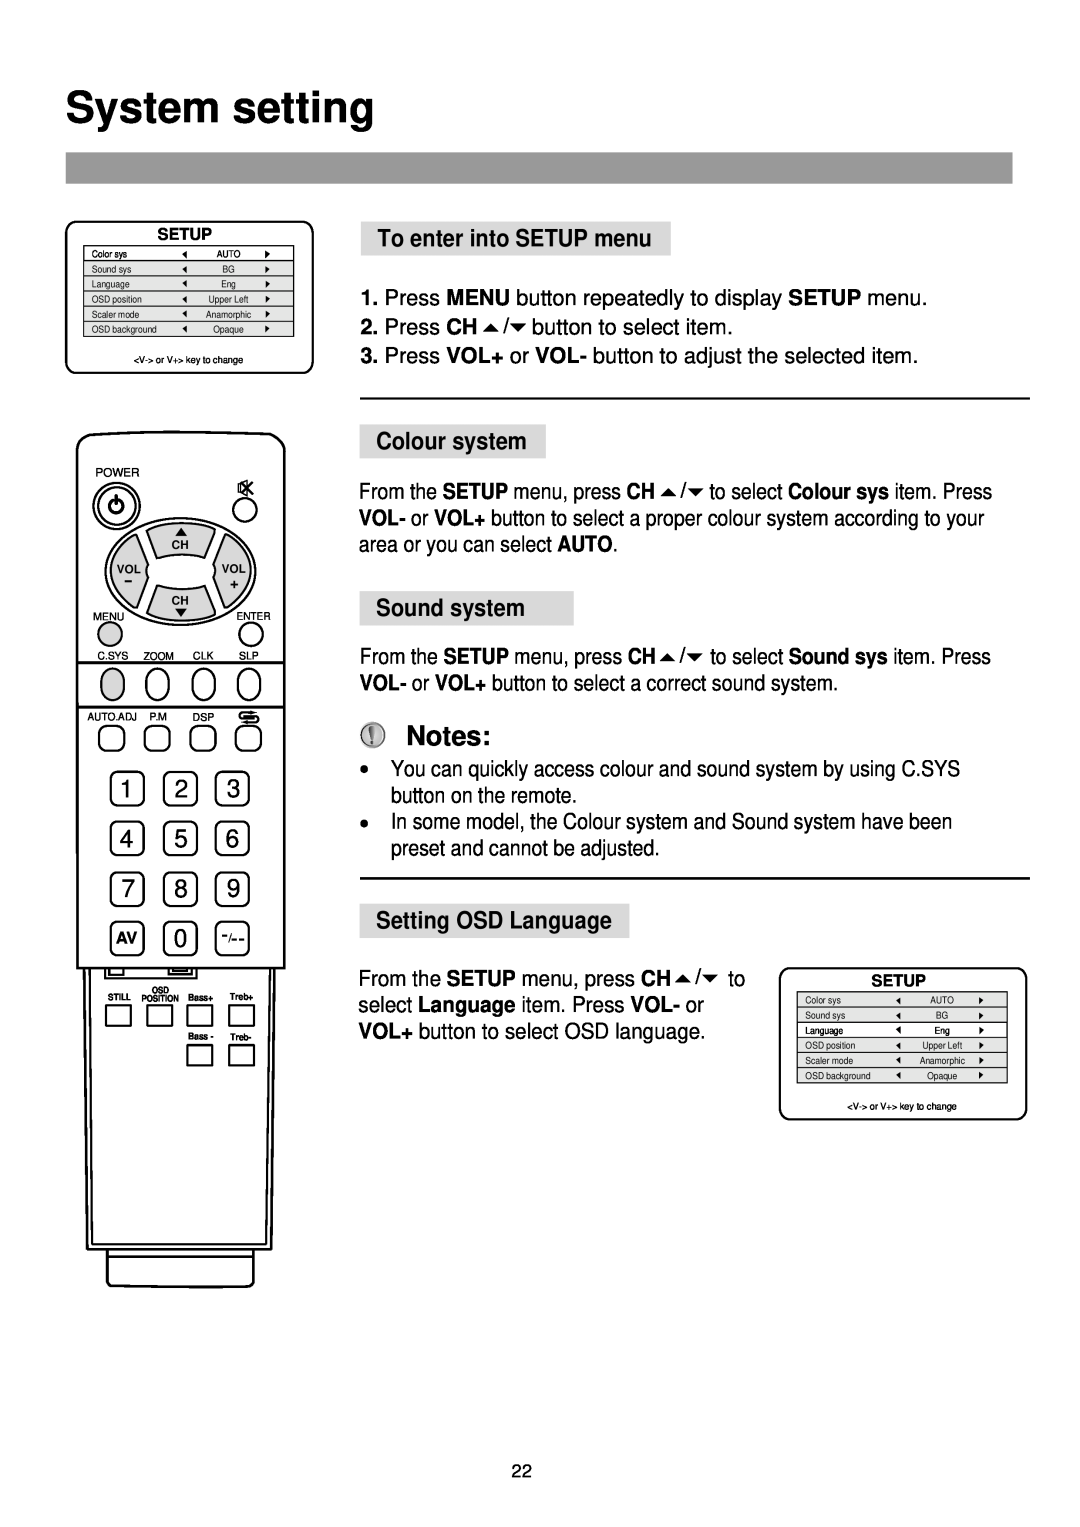 Palsonic TFTV-760 System setting, To enter into SETUP menu, 1 2 4 5 7 8, Colour system, Sound system, Setting OSD Language 